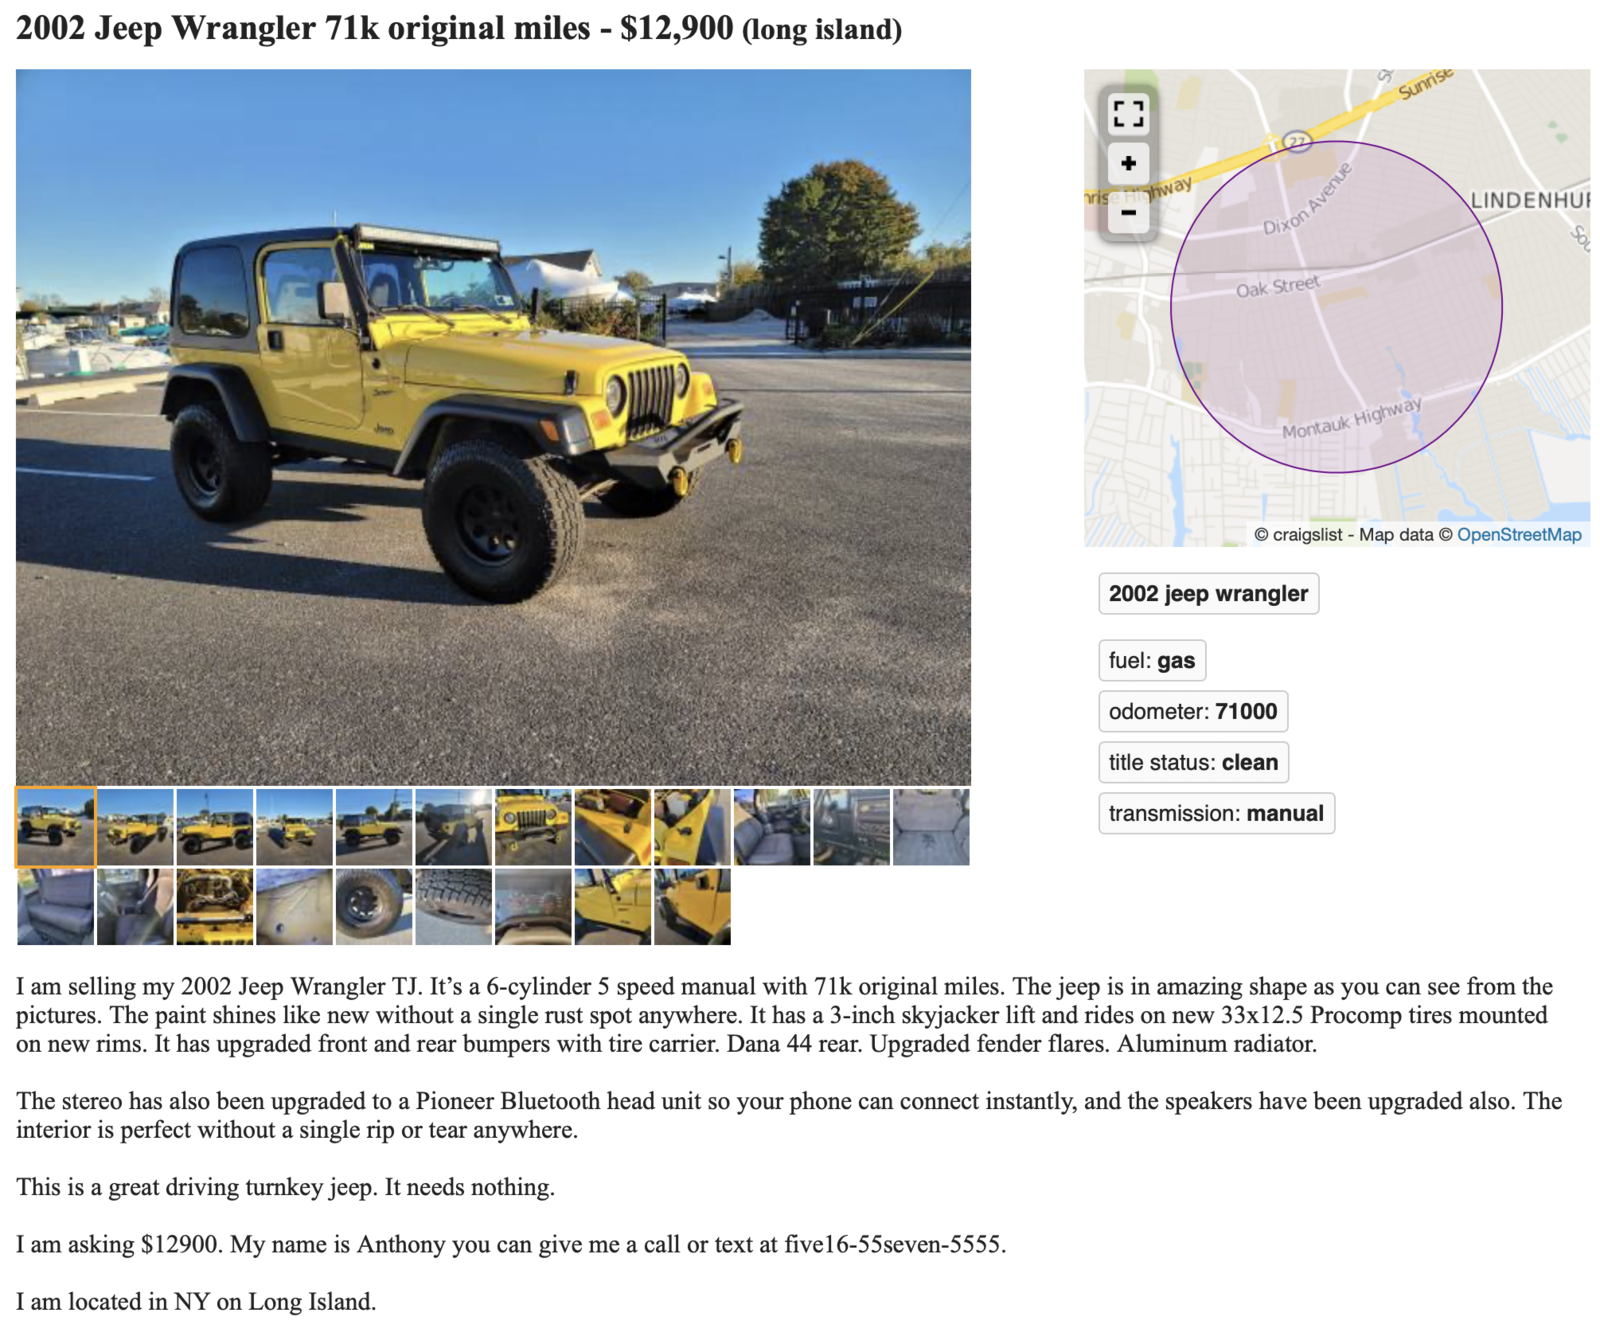 2002 Jeep Wrangler 71k original miles - $12,900 | Jeep Wrangler TJ Forum